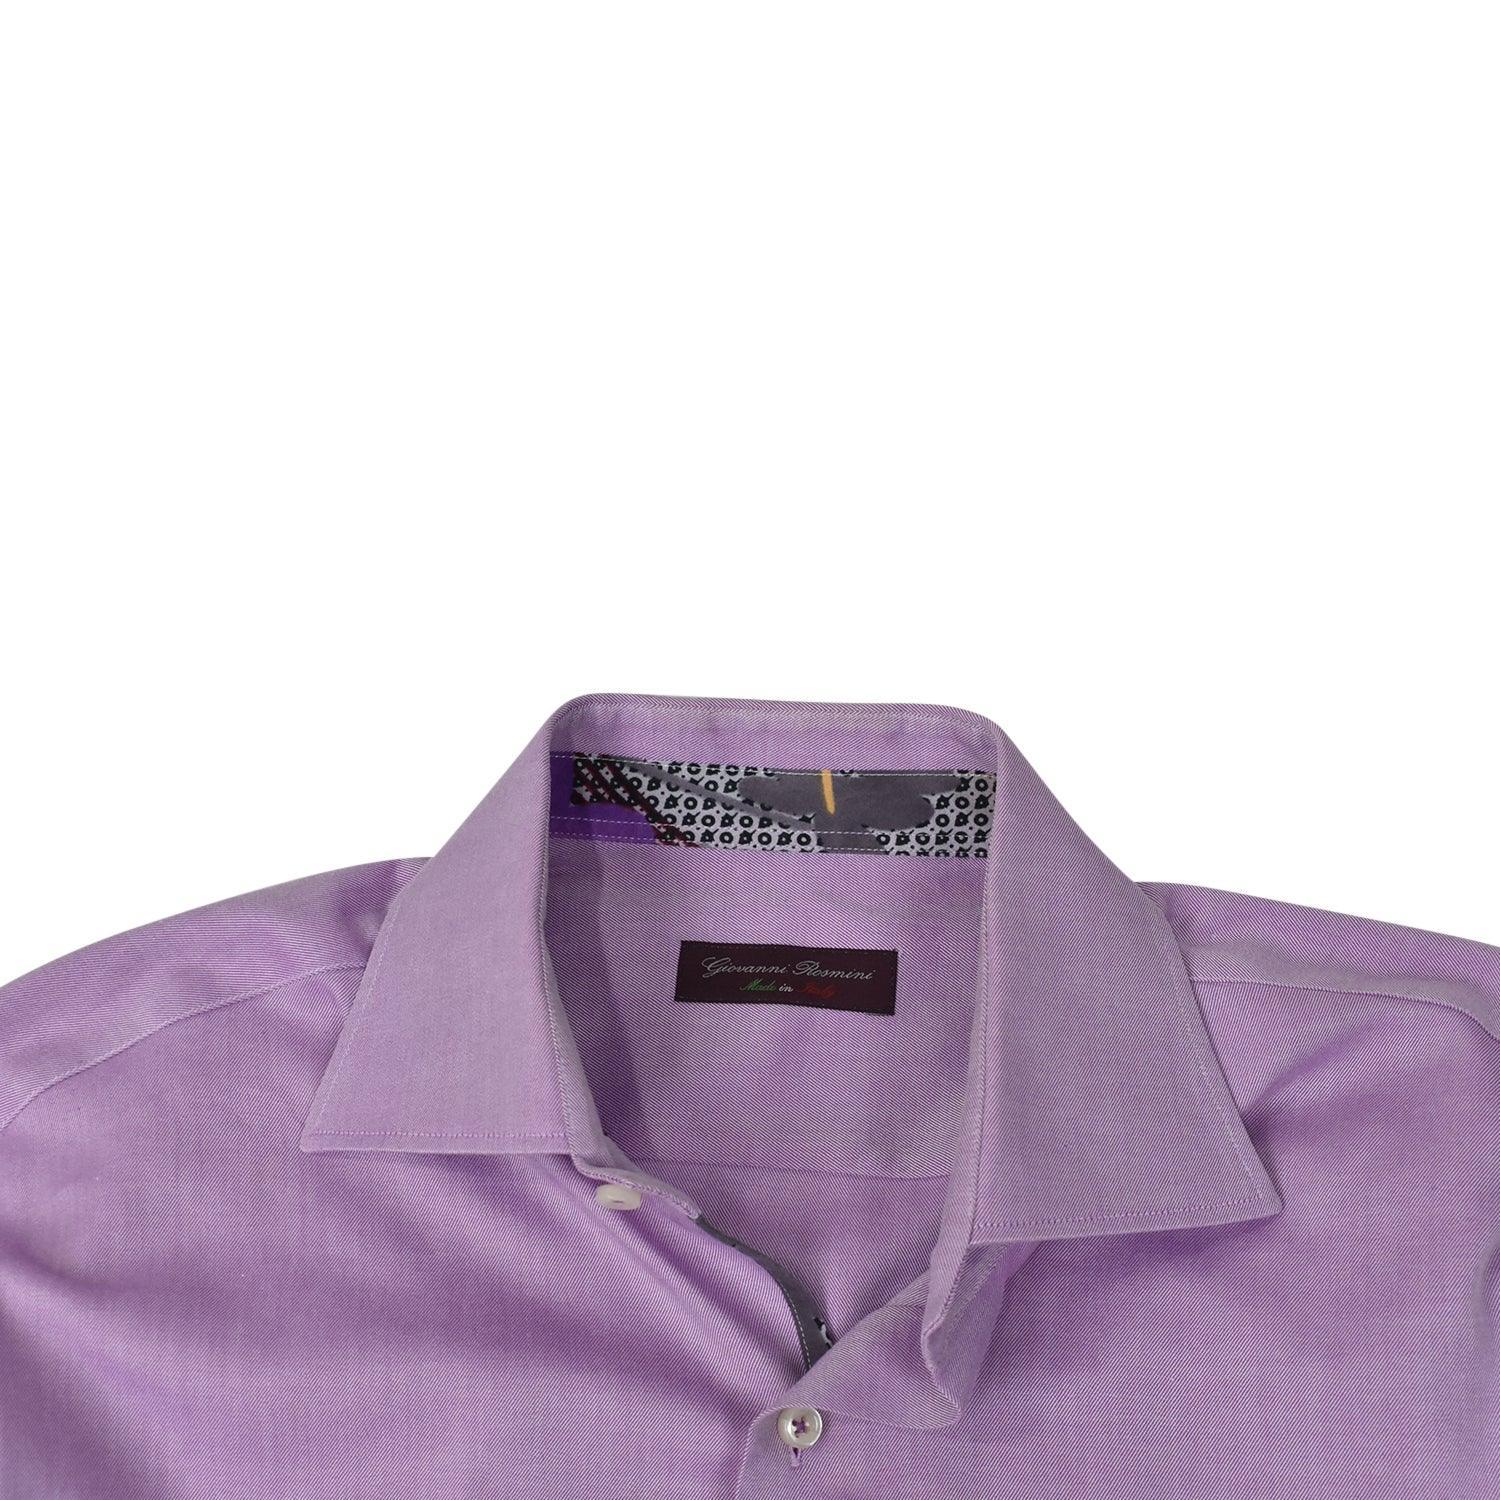 Giovanni Rosmini Shirt - Men's S - Fashionably Yours